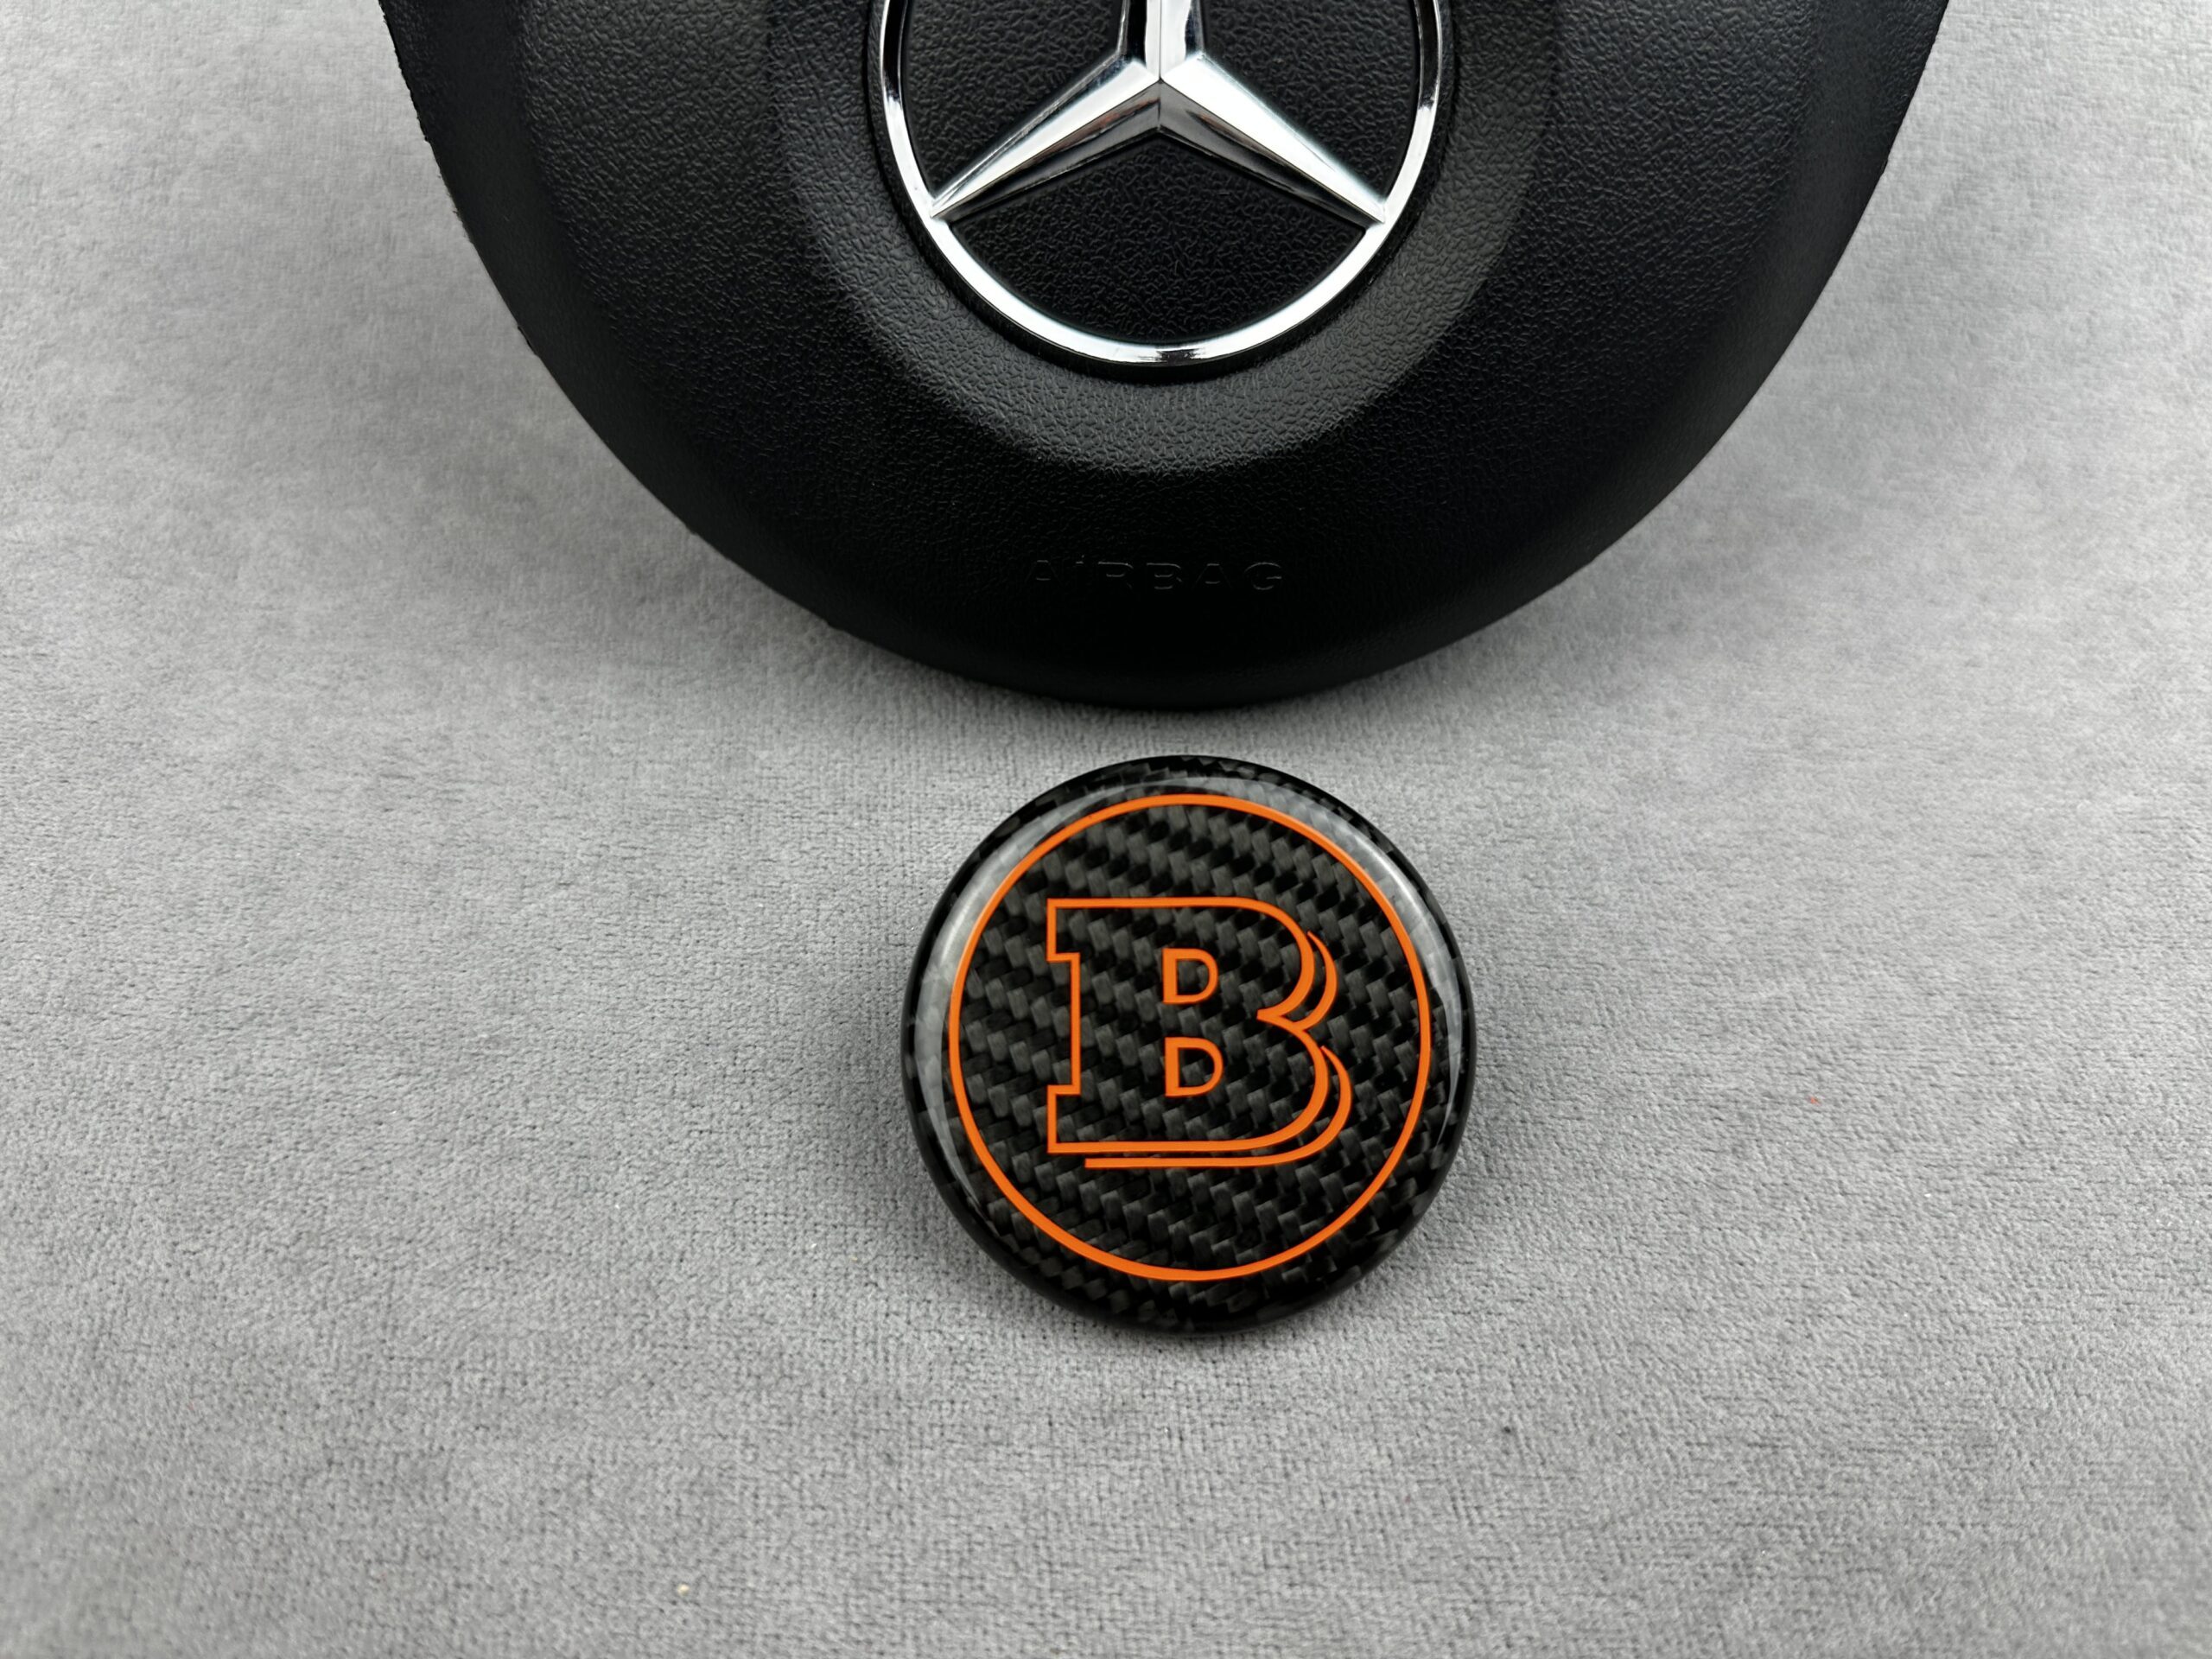 Brabus Orange Emblem in Air Bag for Mercedes Class 2013-2018